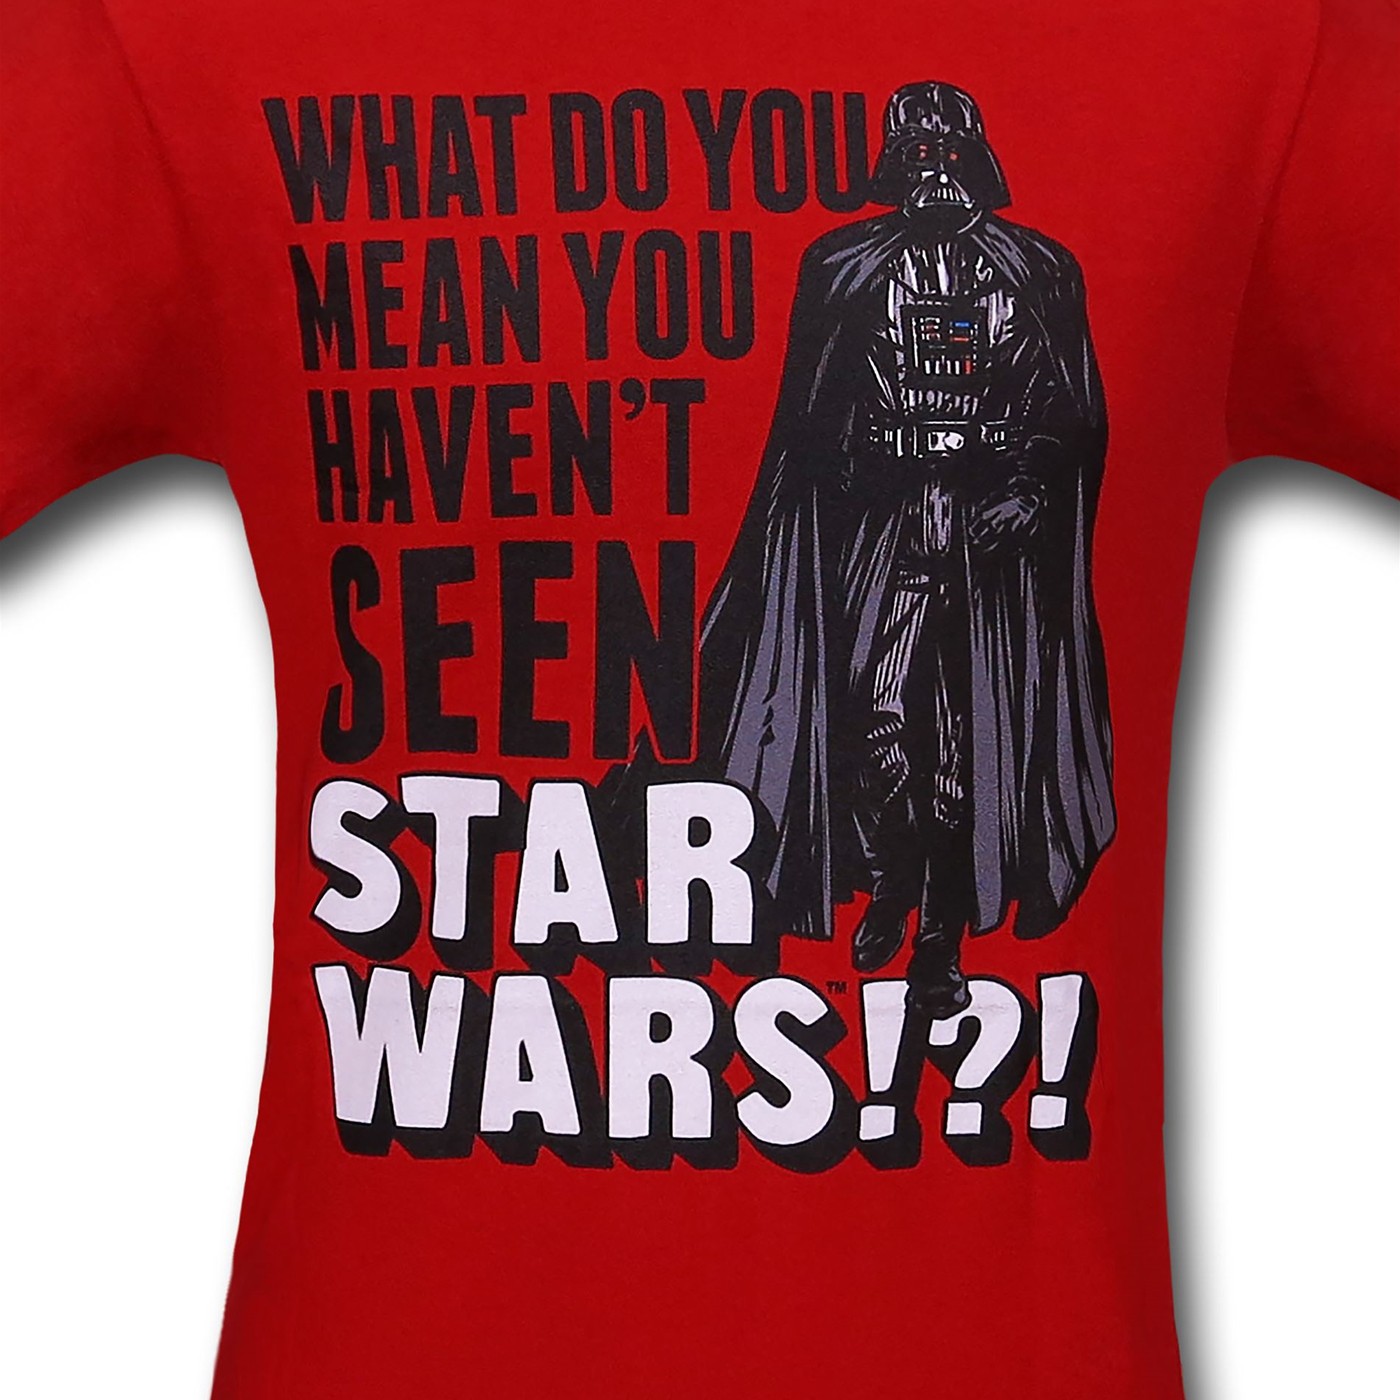 Star Wars Haven't Seen Star Wars T-Shirt